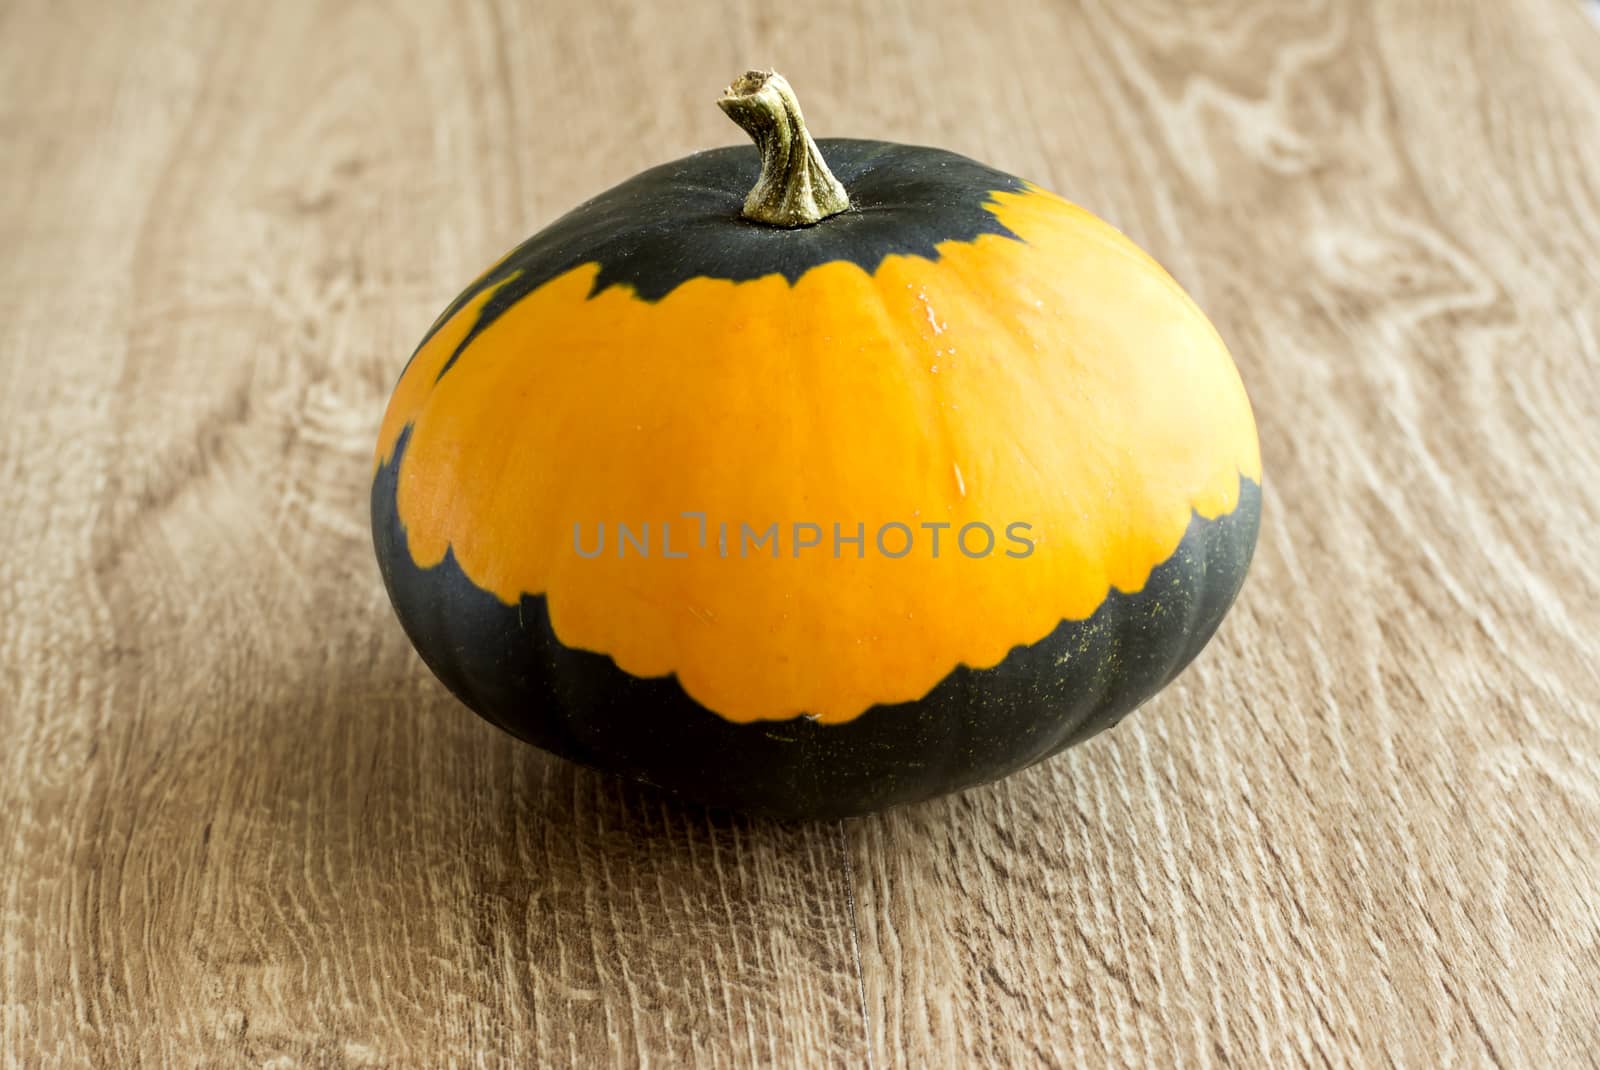 decorative pumpkin yellowish-green on the table